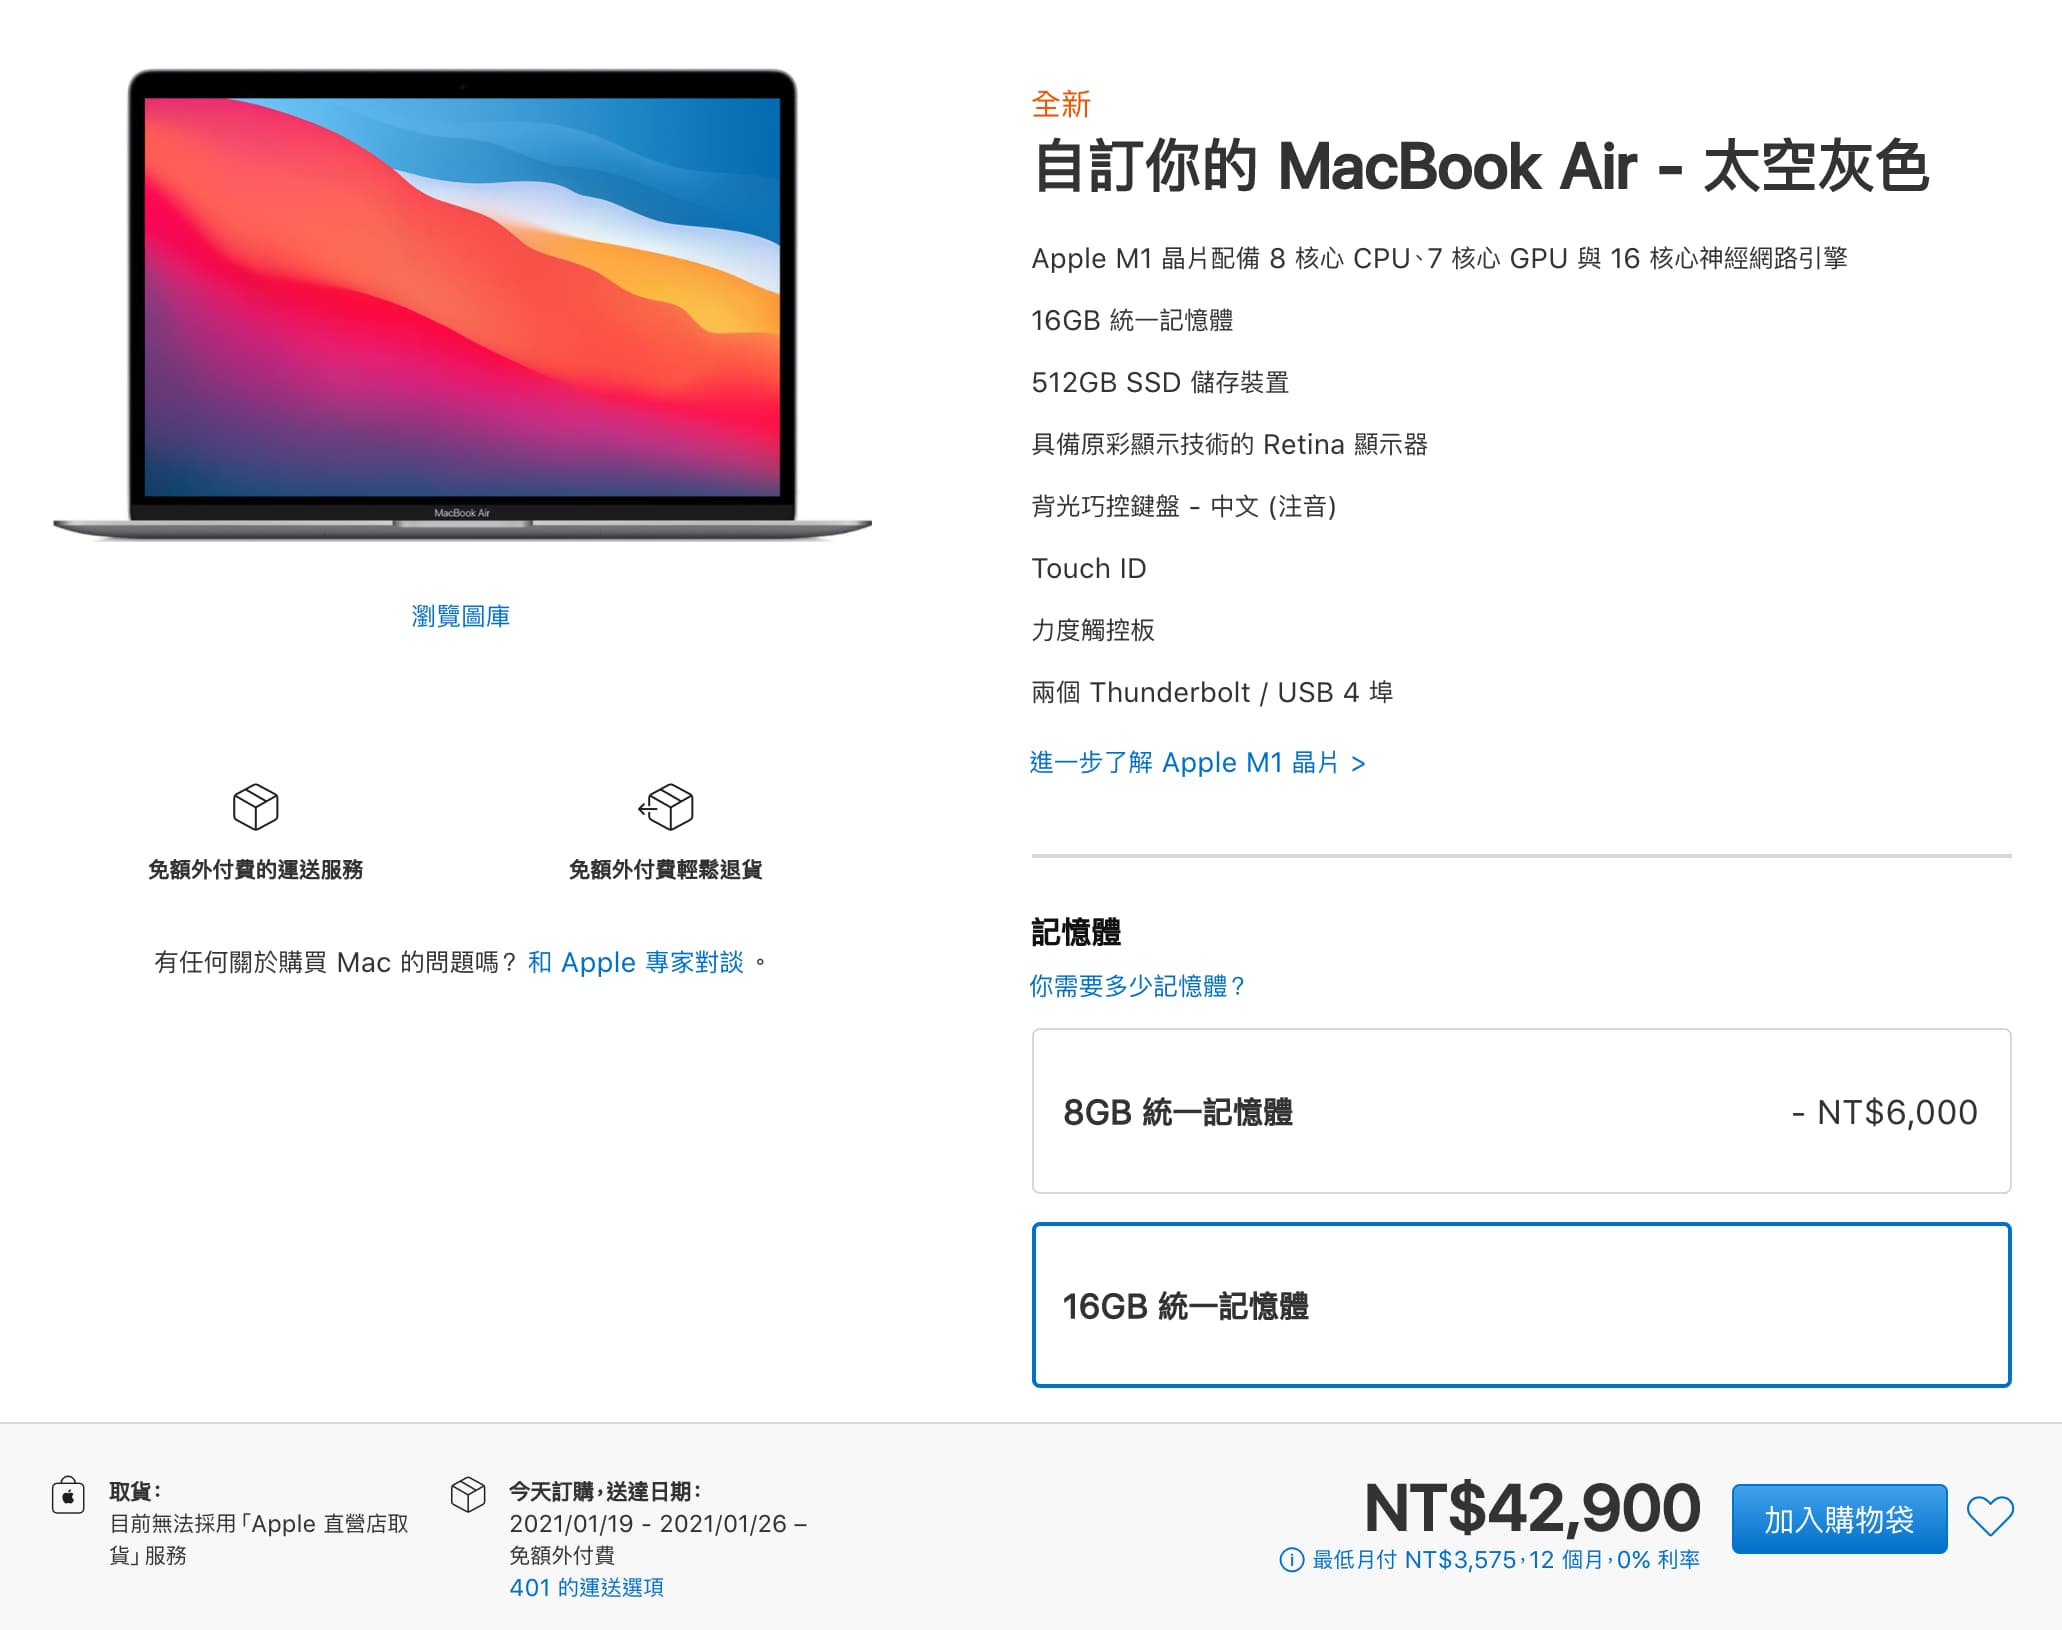 apple m1 macbook pro vs macbook air comparison 18